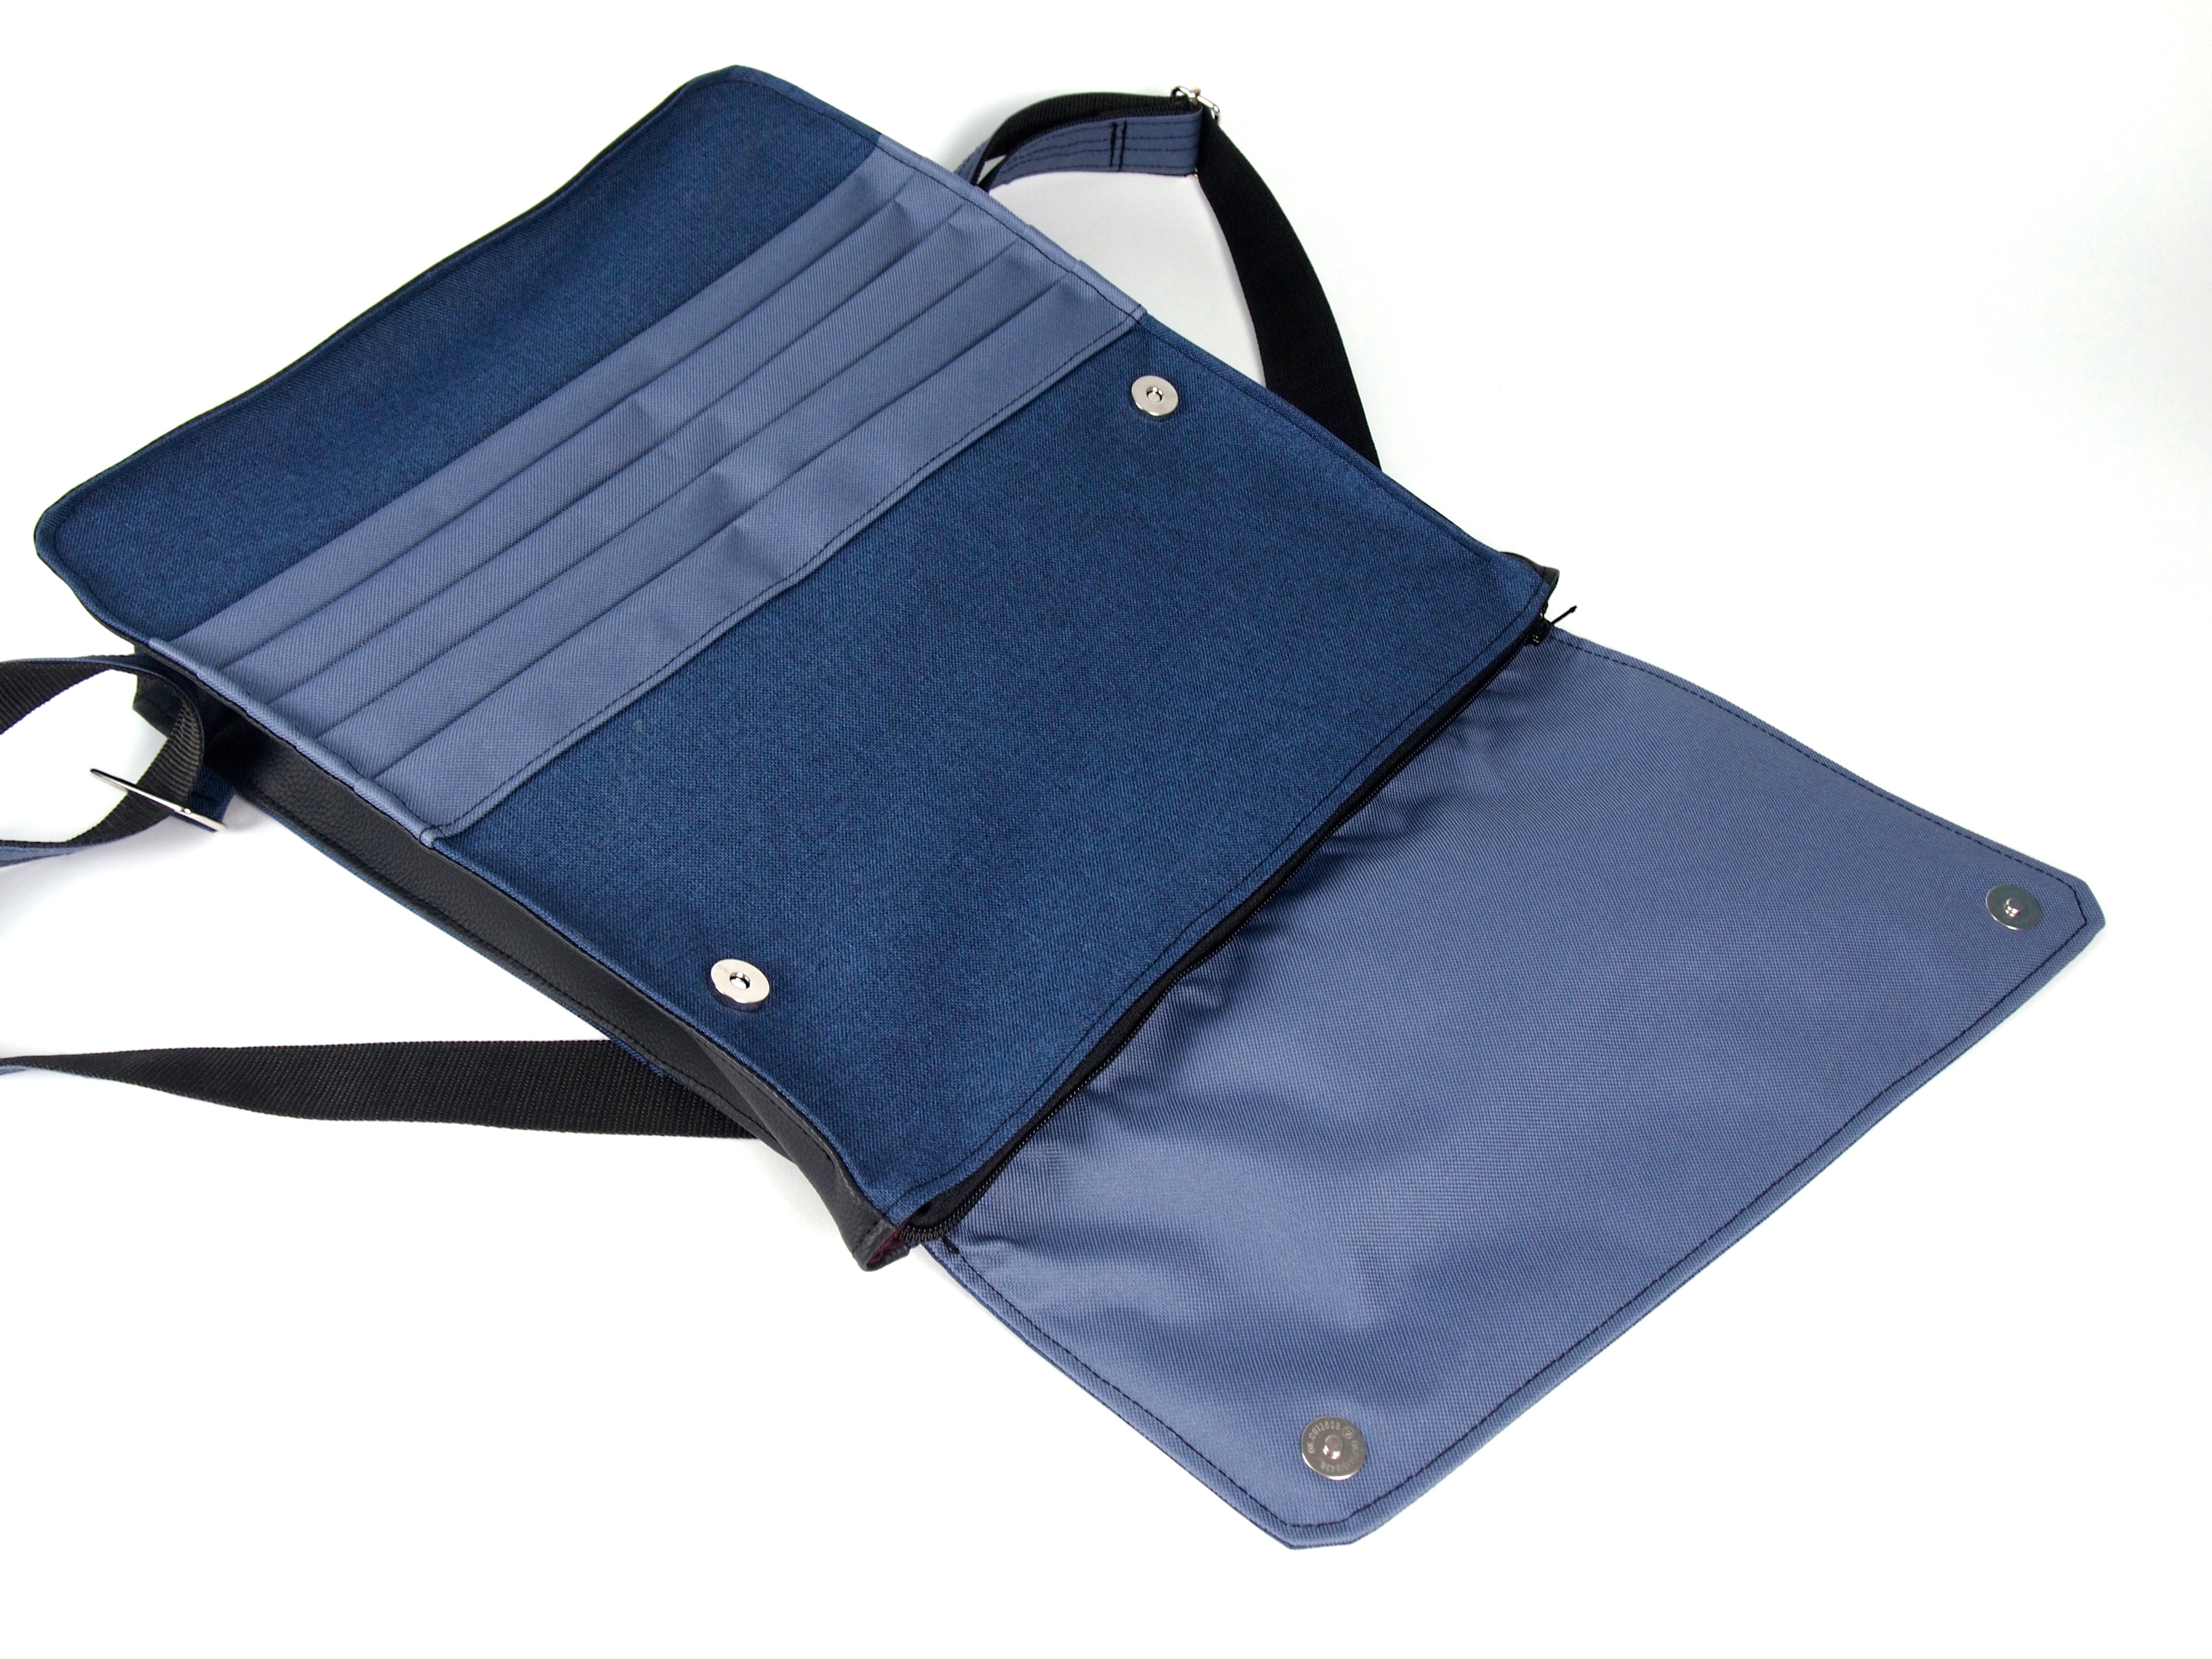 Bardo work backpack - blue - Premium Bardo work backpack from BARDO ART WORKS - Just lvblue, dark blue, handemade, laptop backpack, unisex, vegan leather, water proof, work160! Shop now at BARDO ART WORKS